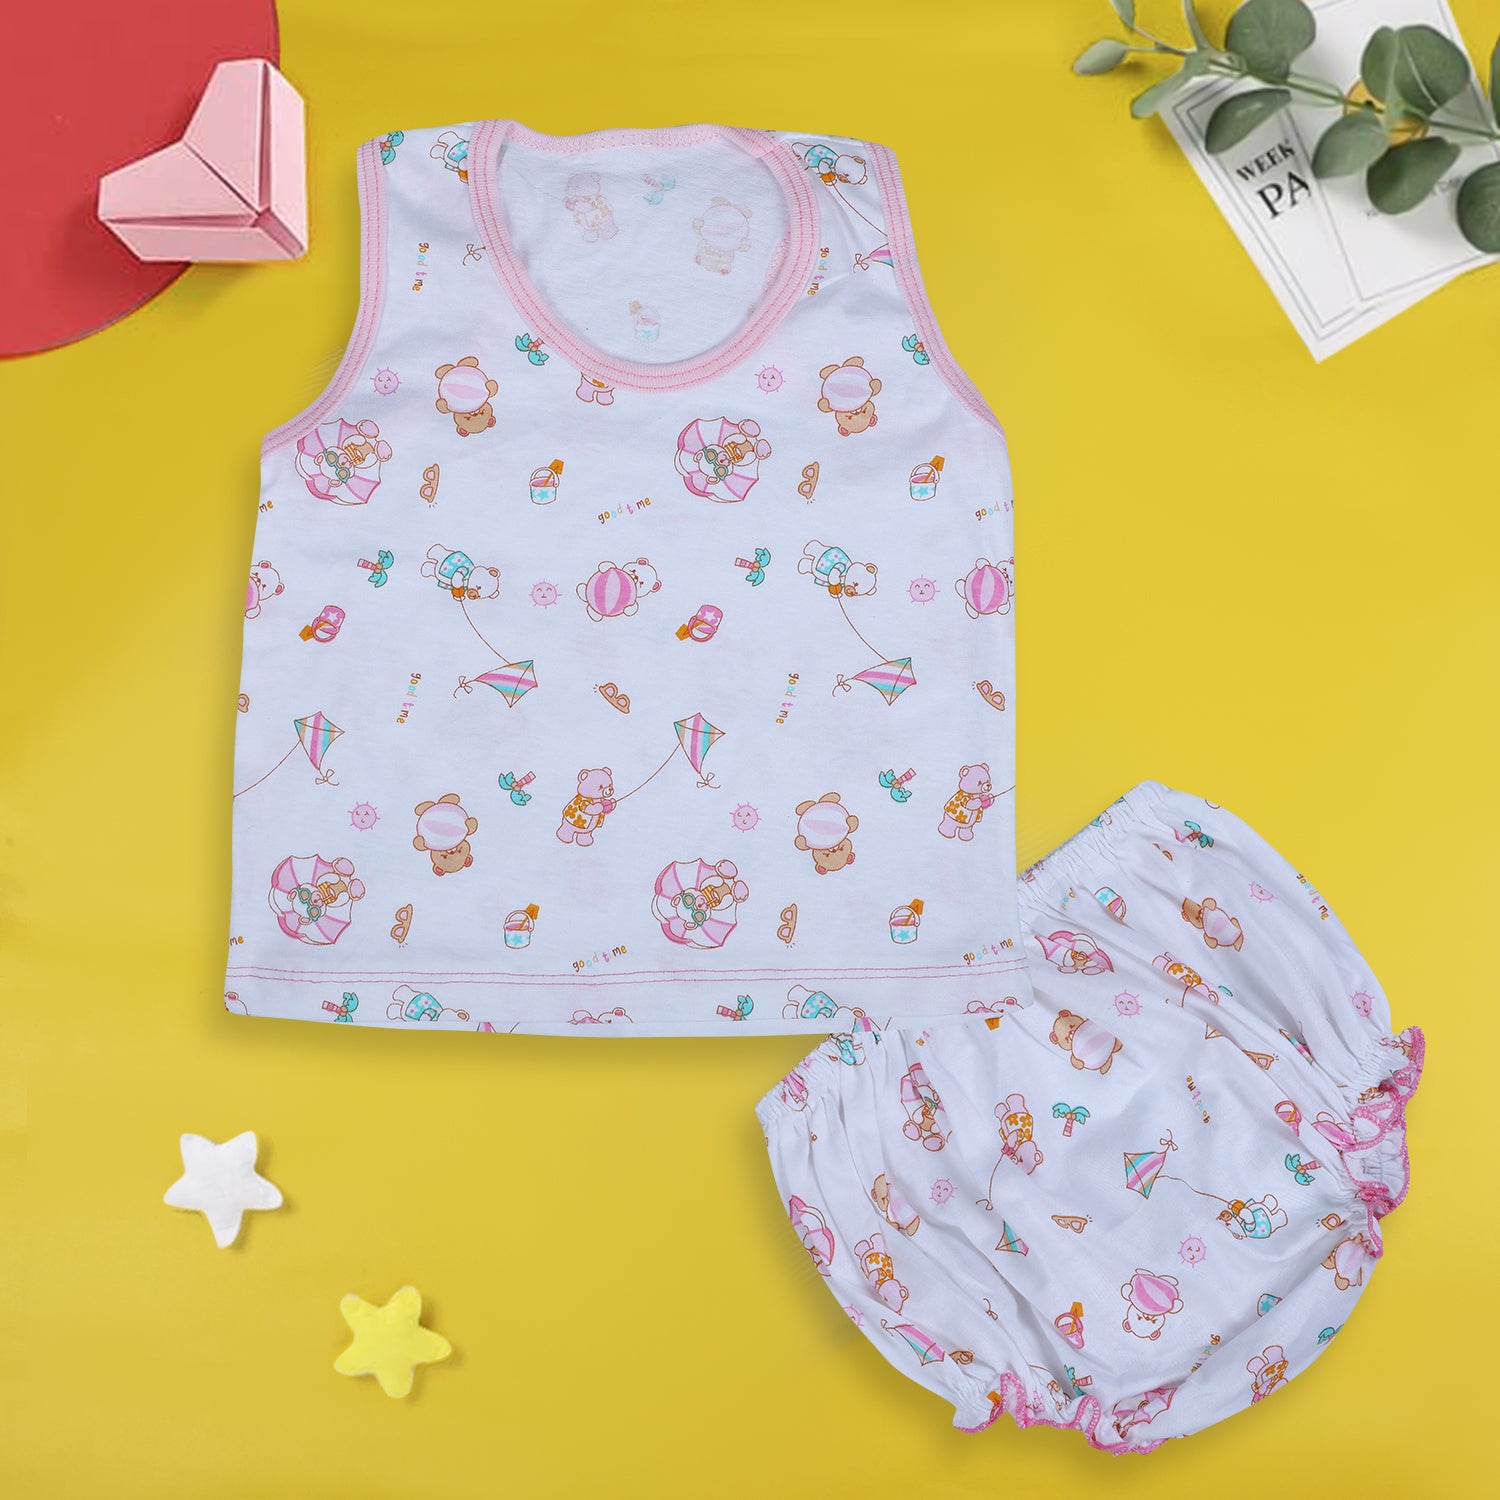 Baby Moo Kite Flying Bear Pure Cotton Sleeveless Vest With Matching Bottom 2pcs Set - Pink